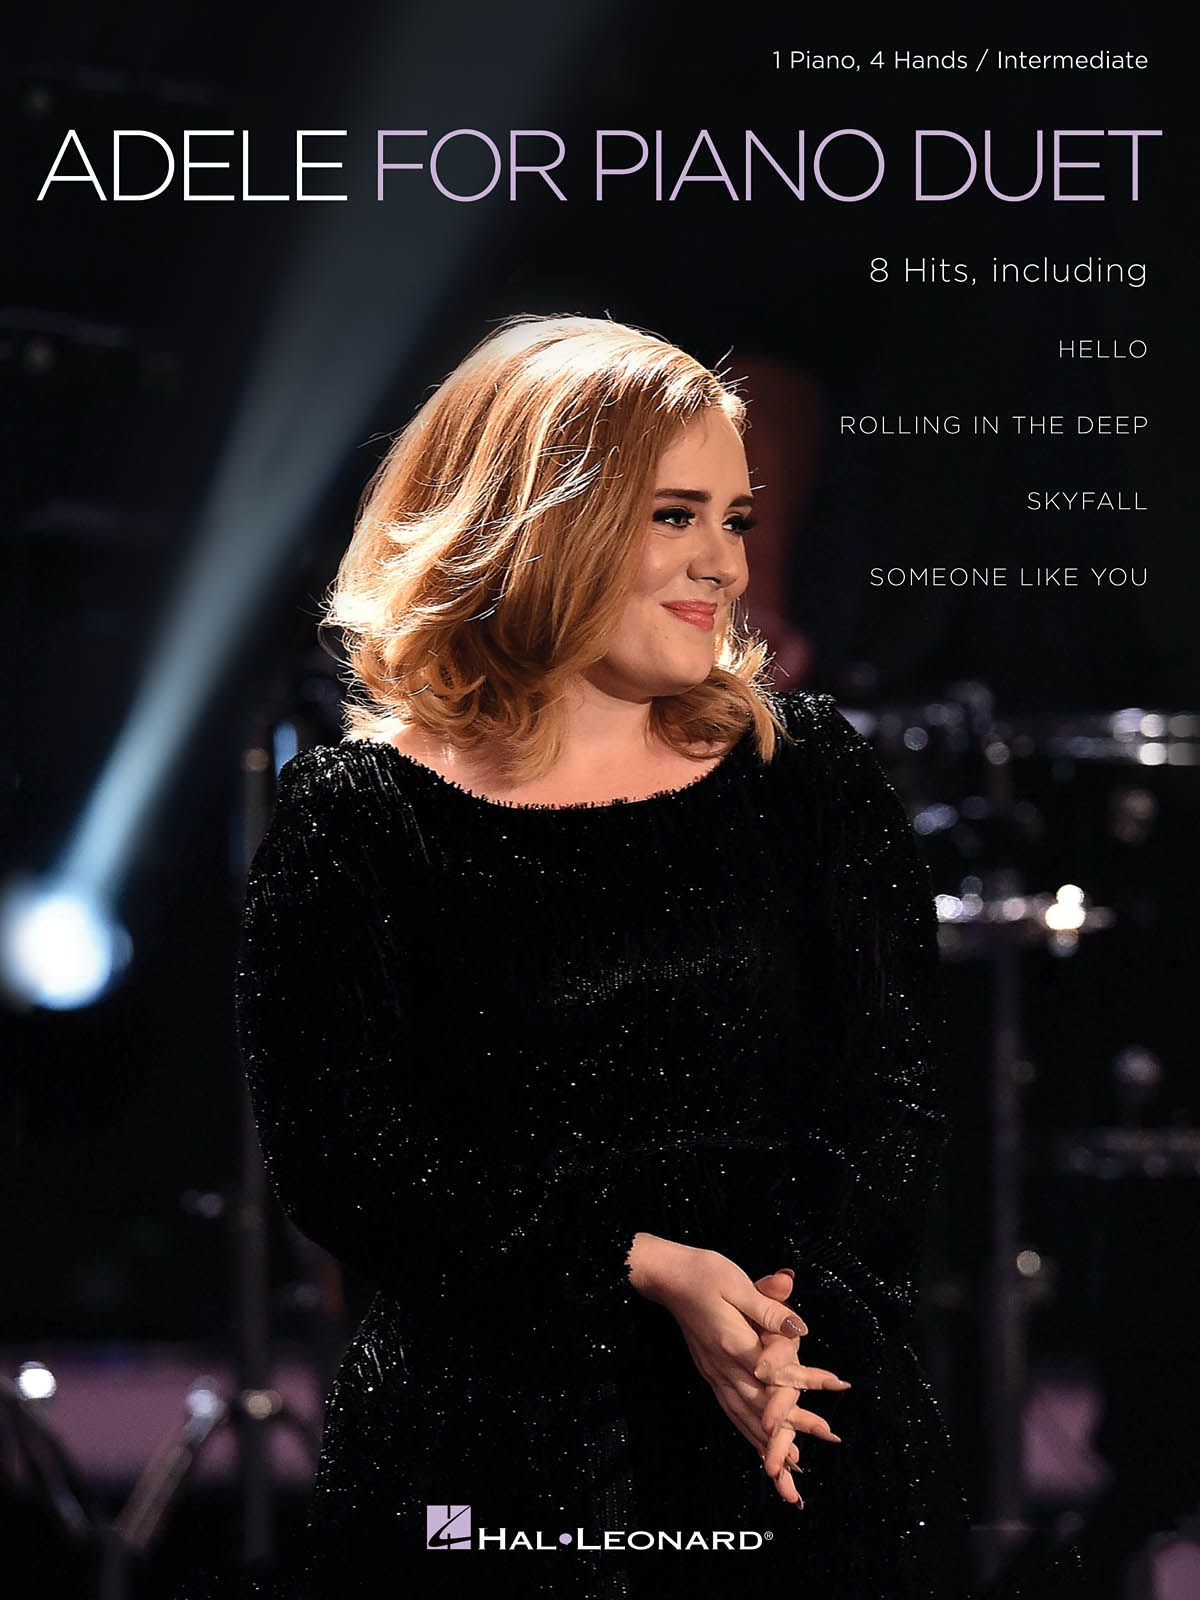 Adele for Piano Duet - 1 Piano, 4 Hands / Intermediate Level písně pro dva klavíry